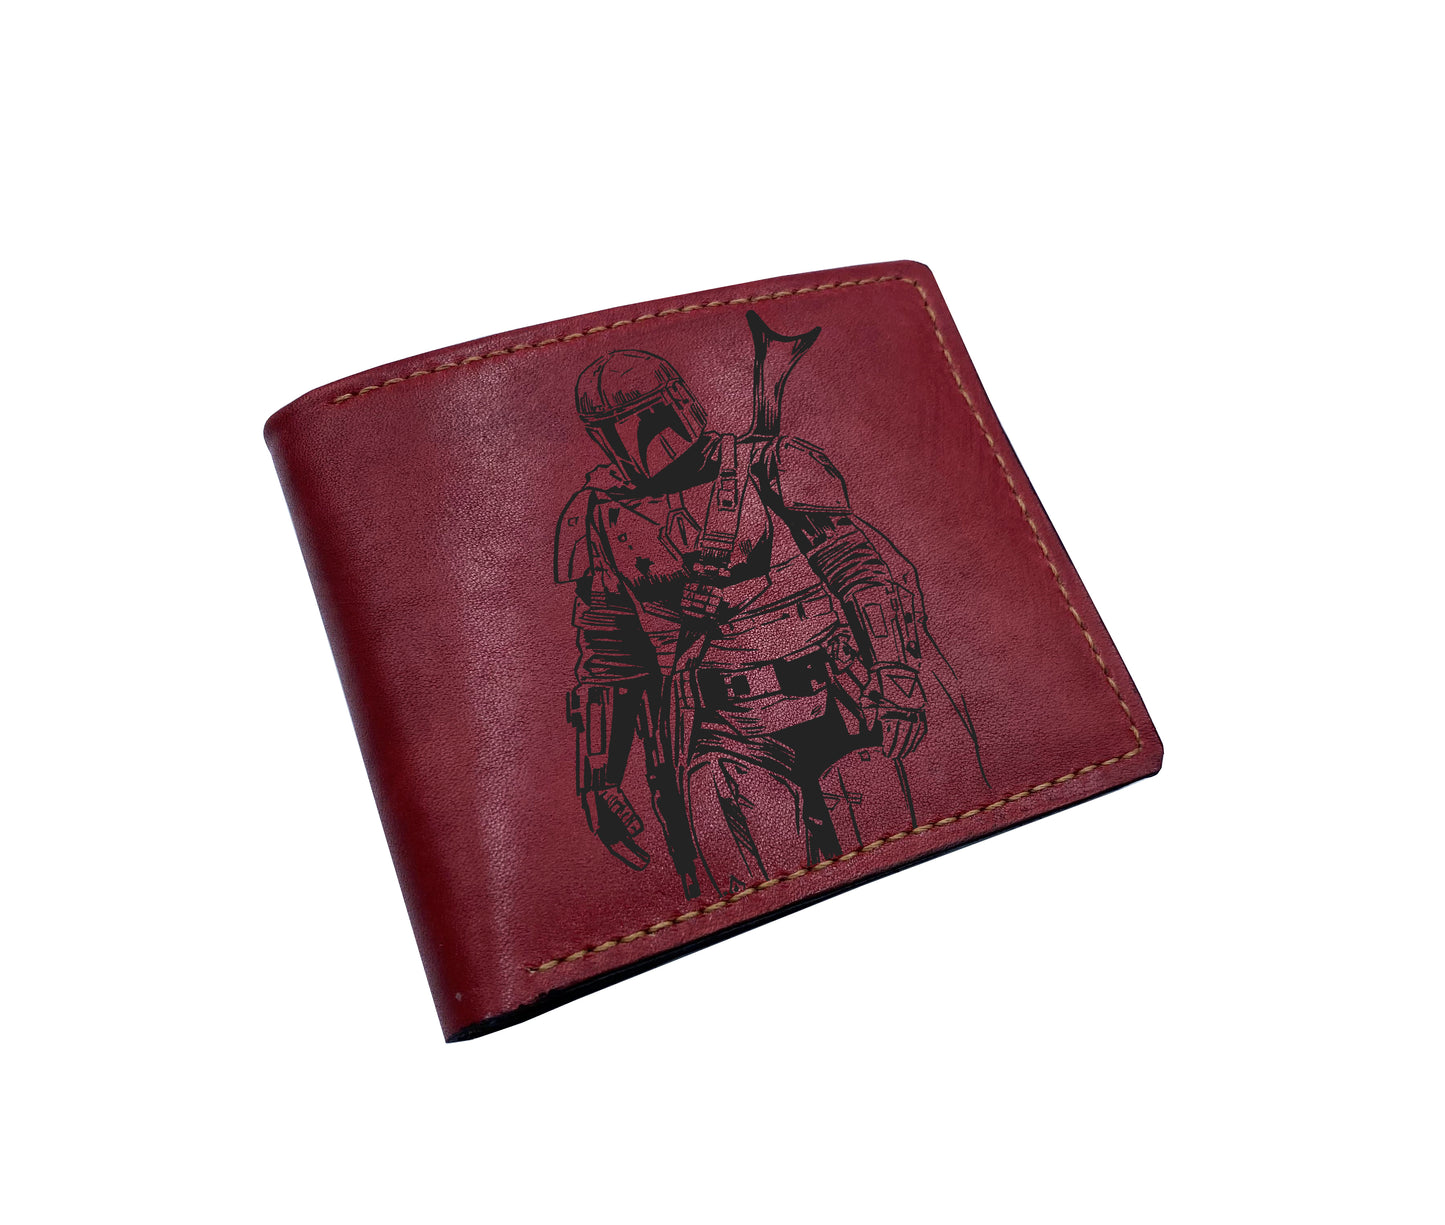 Starwars art wallet, Mandalorian Grugu adventure drawing, leather anniversary present for boyfriend, xmas gift for dad